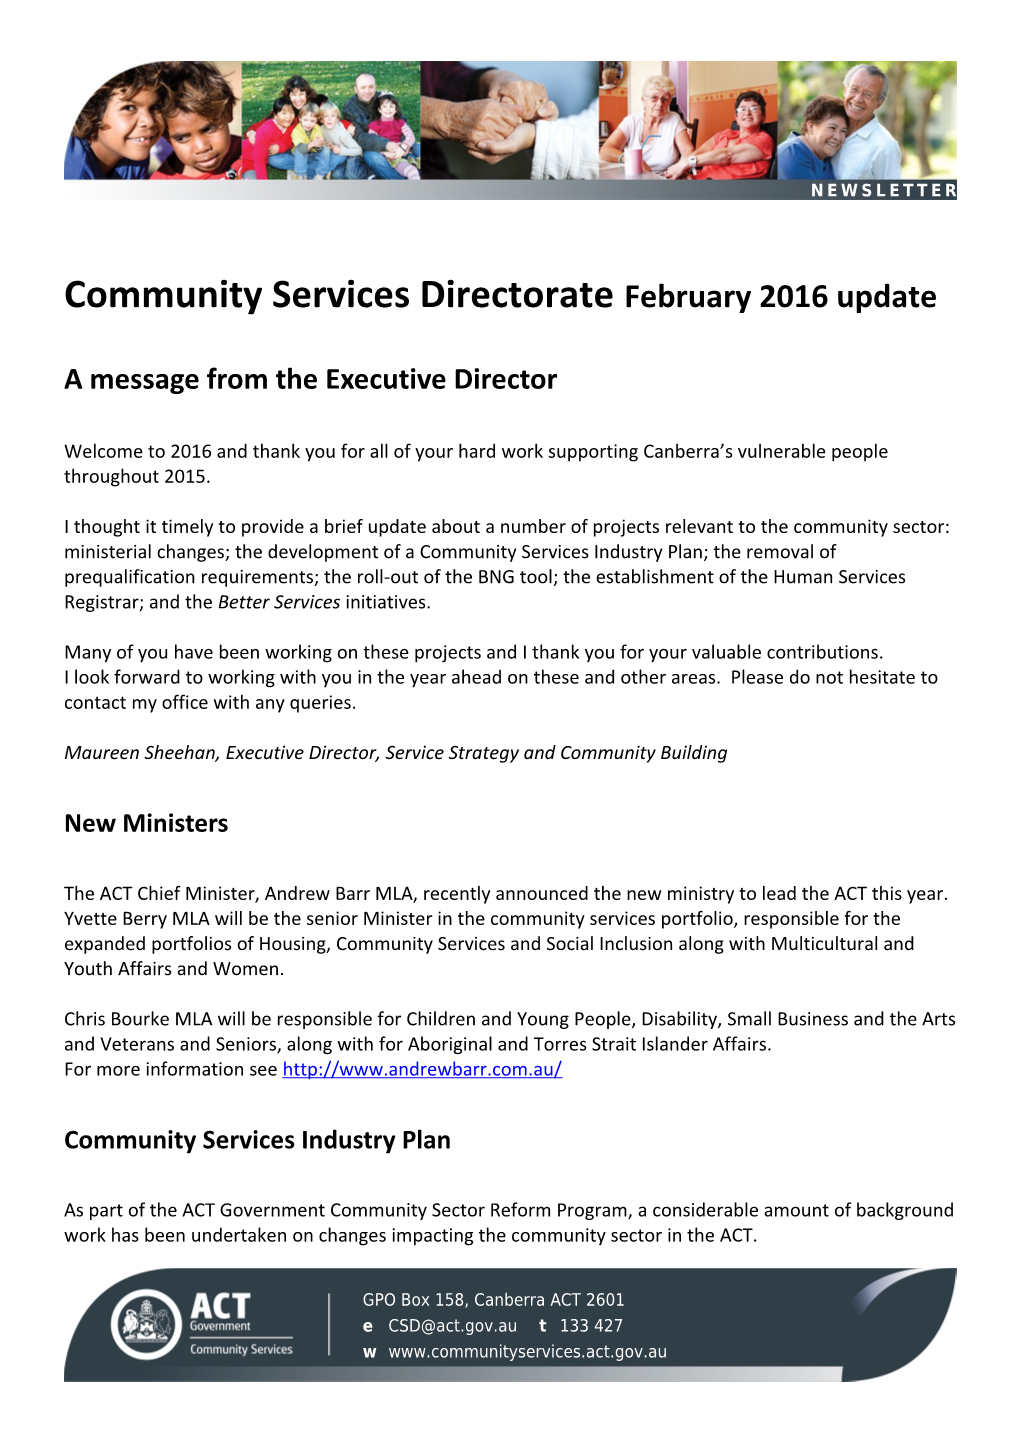 Community Services Directorate February 2016 Update